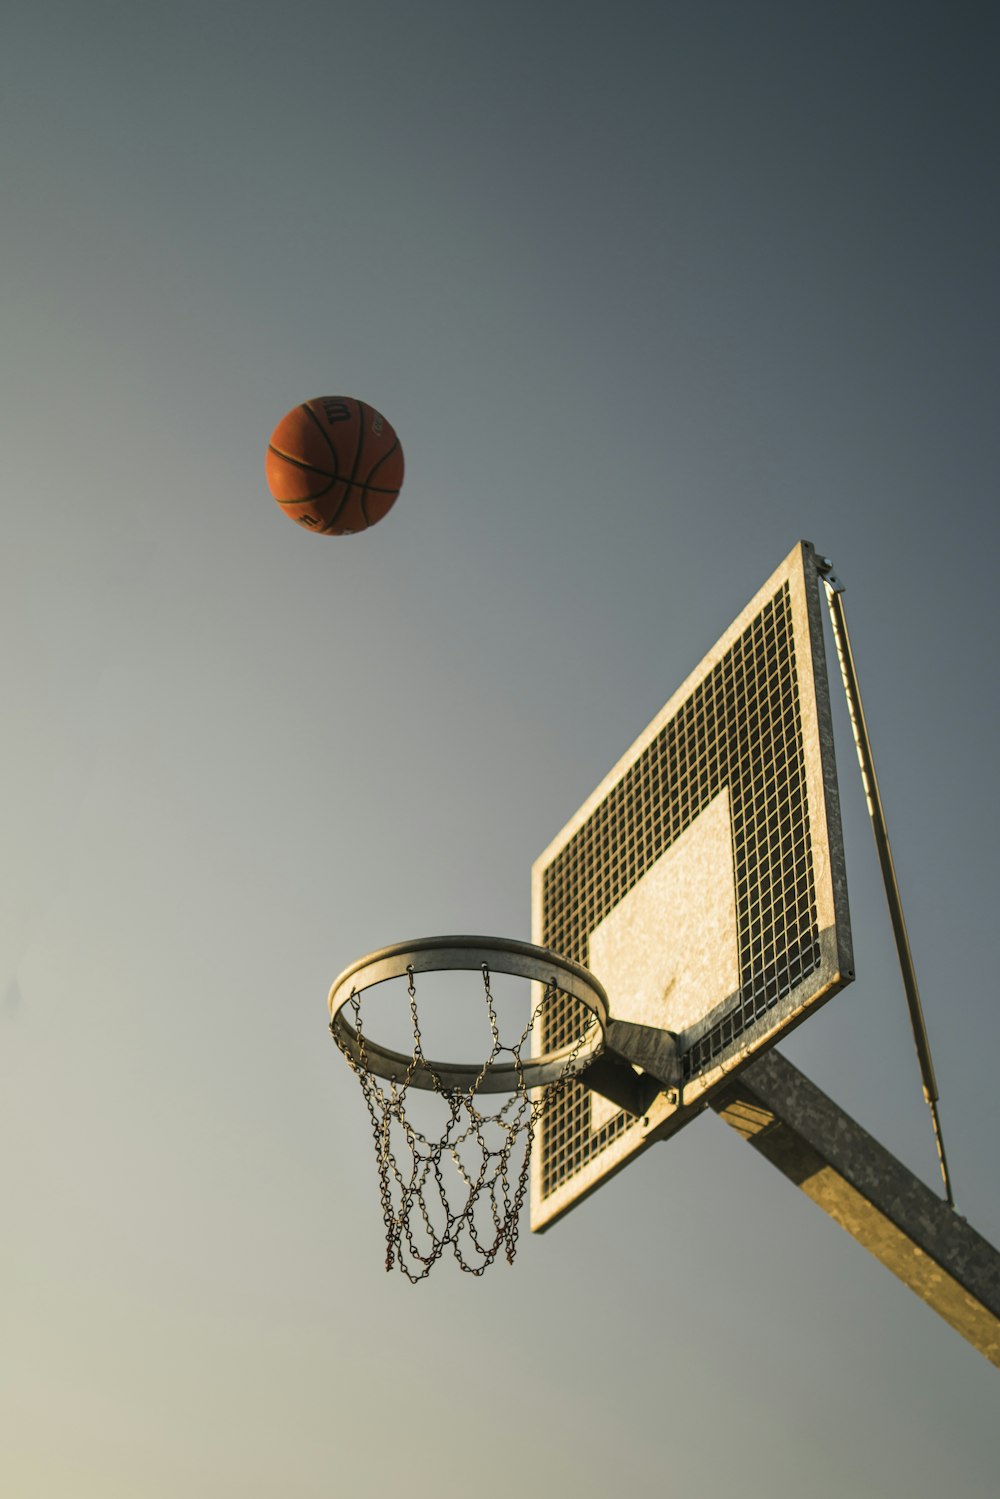 Basket Ball Pictures | Download Free Images on Unsplash